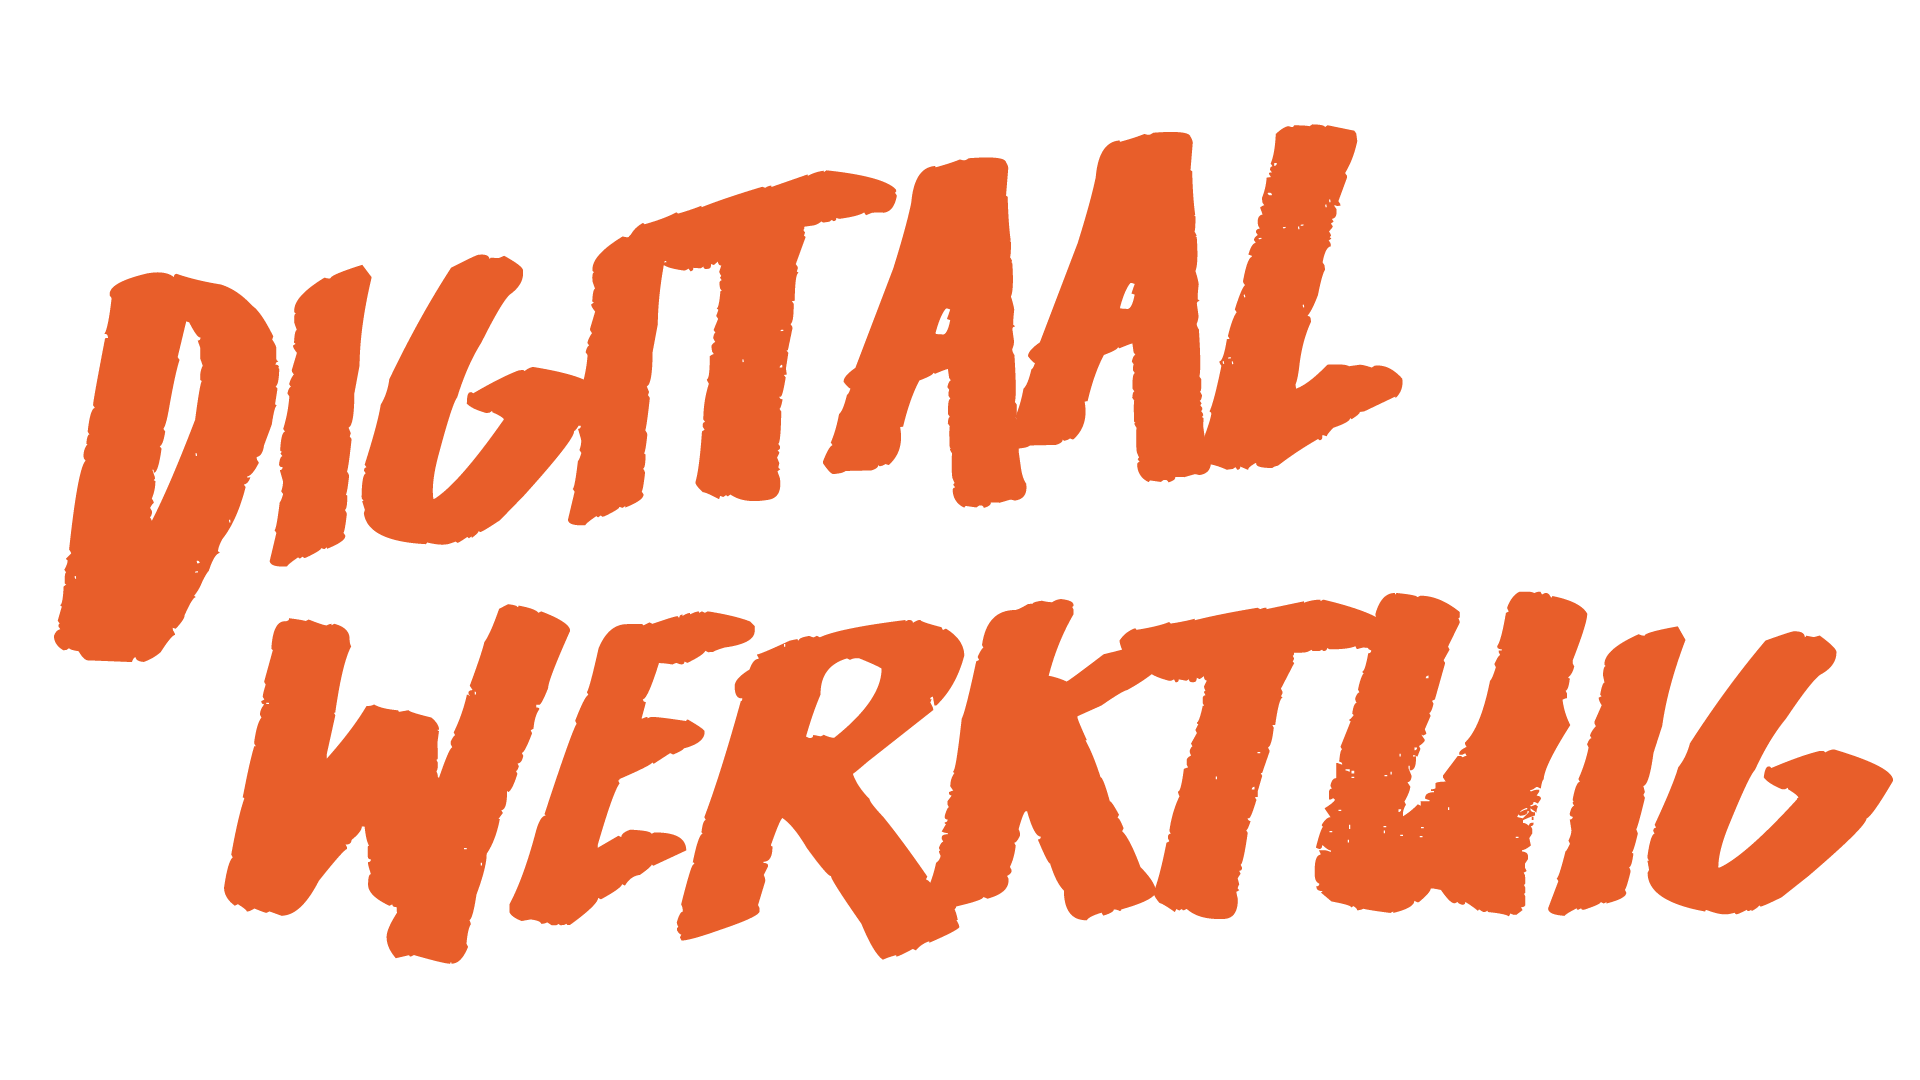 The Digitaal Werktuig logo